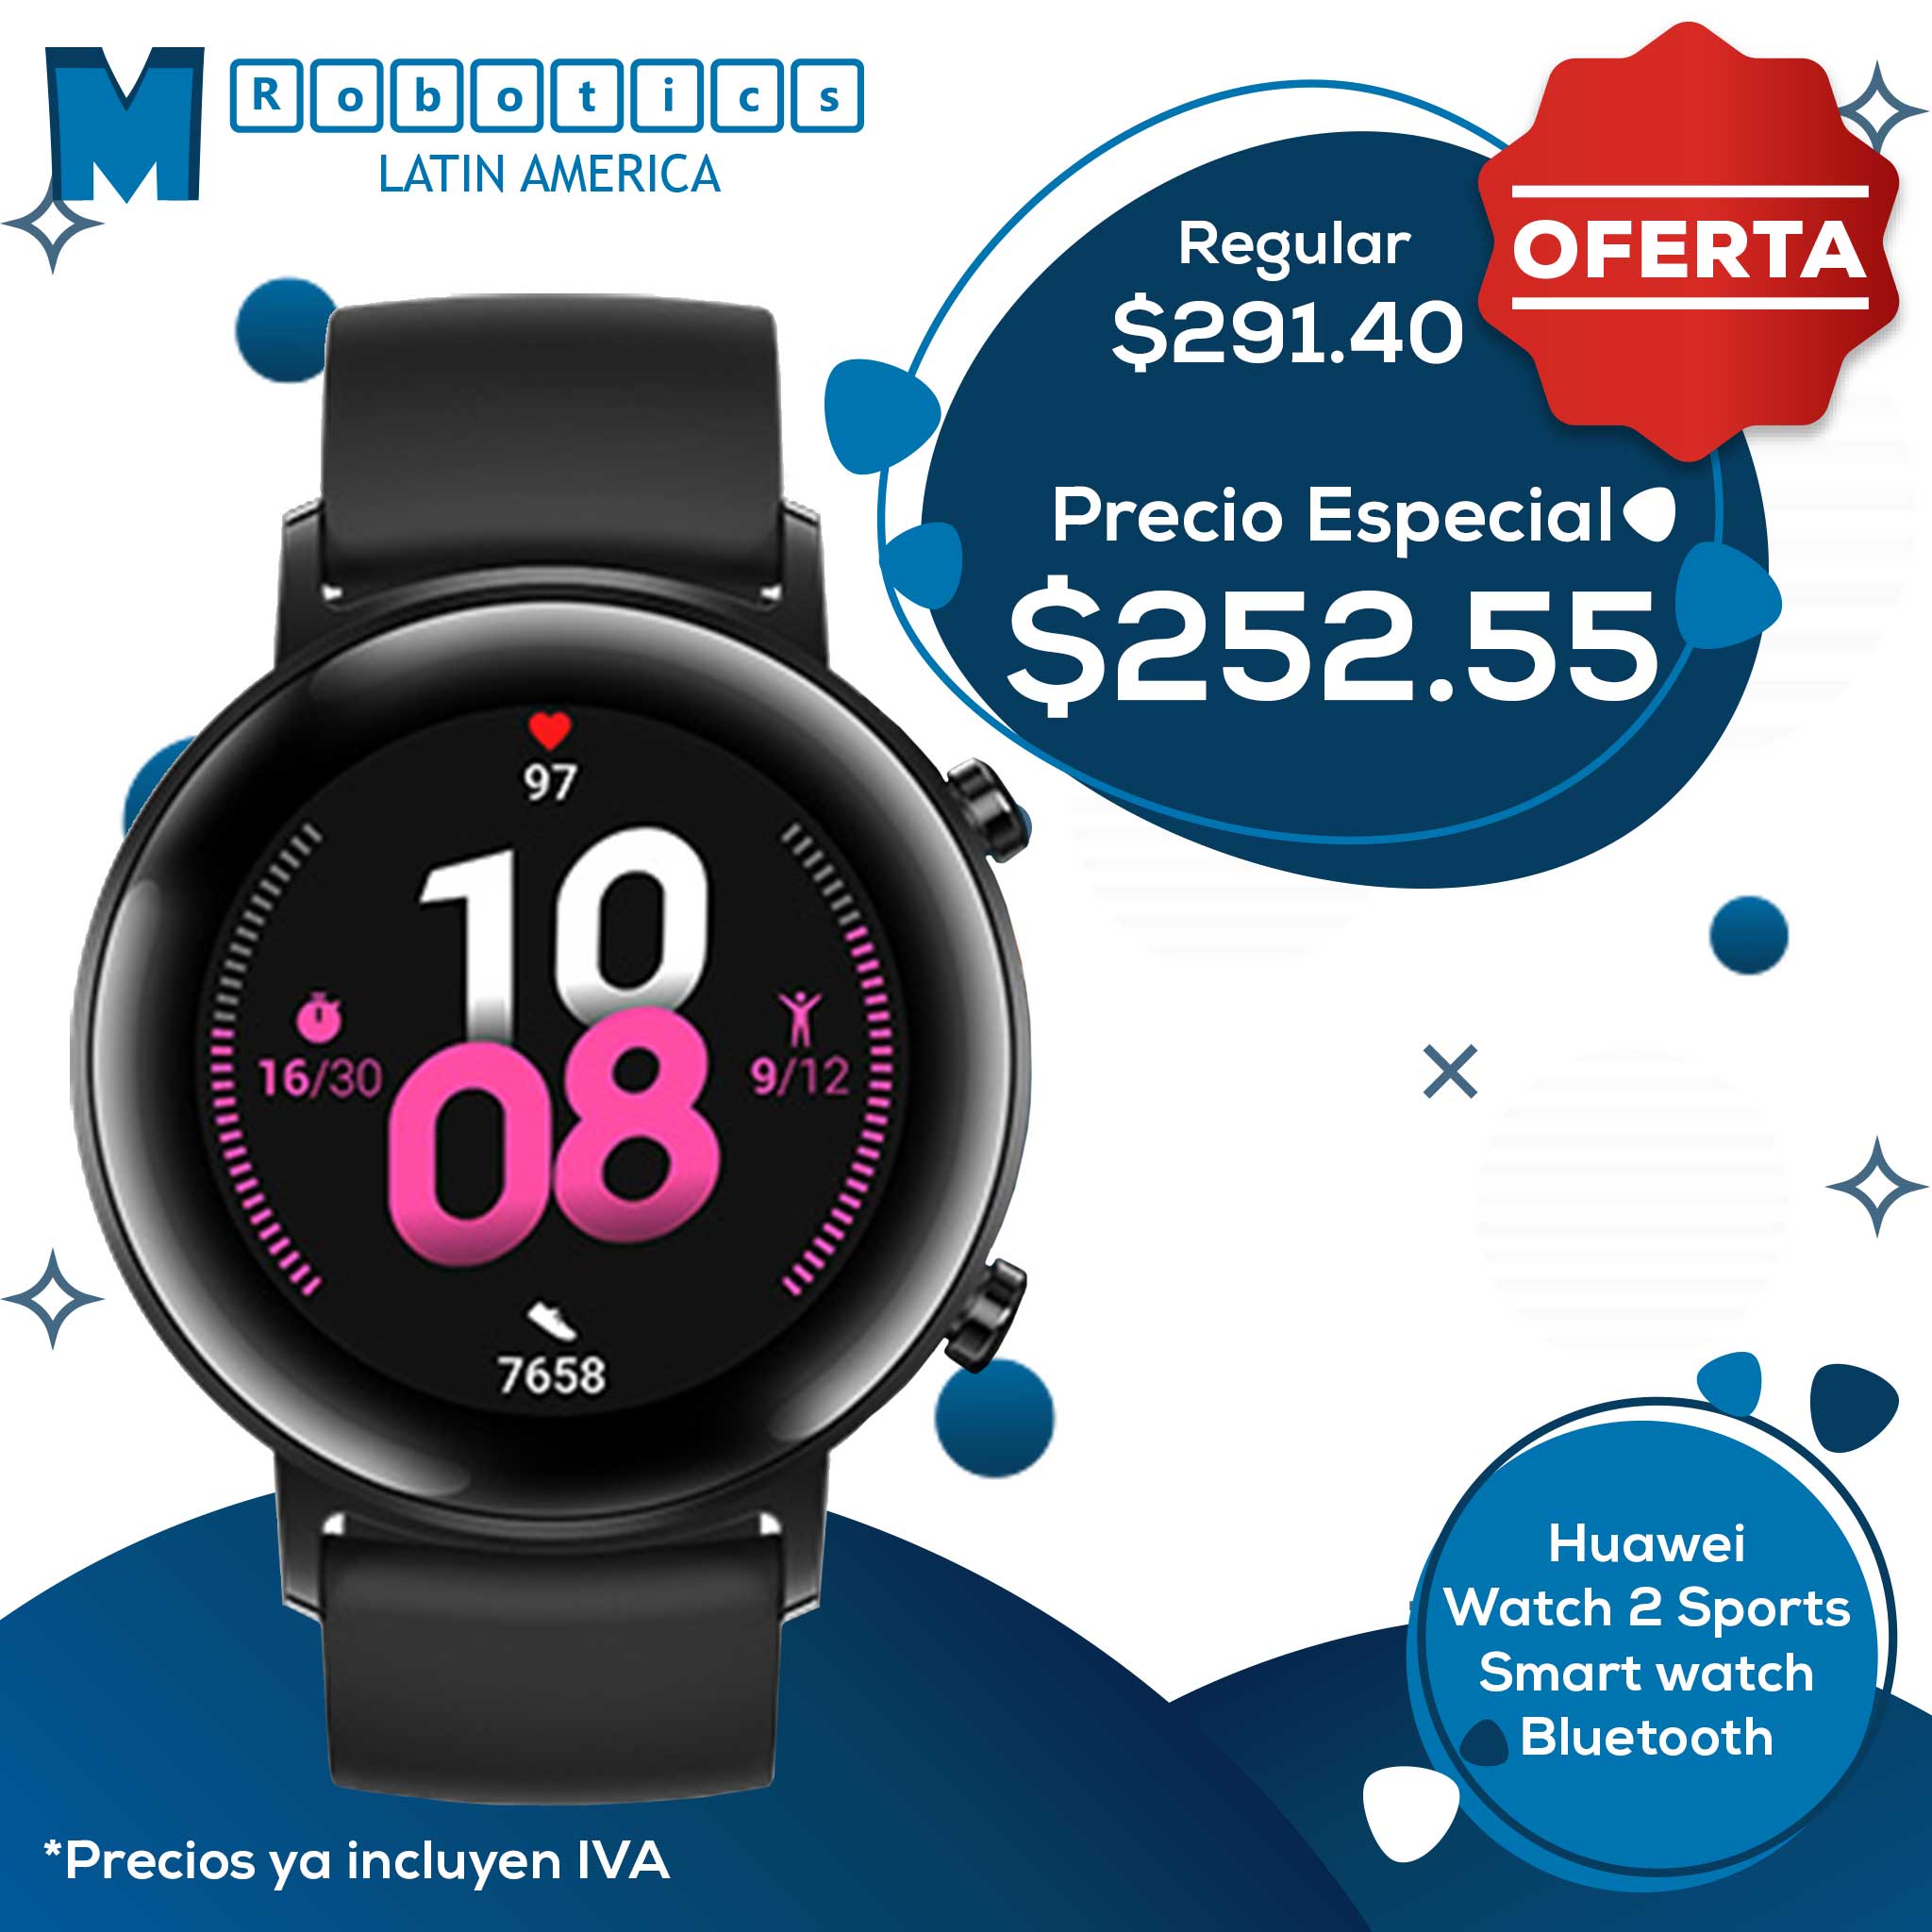 Huawei Watch 2 Sports – Smart watch – Bluetooth